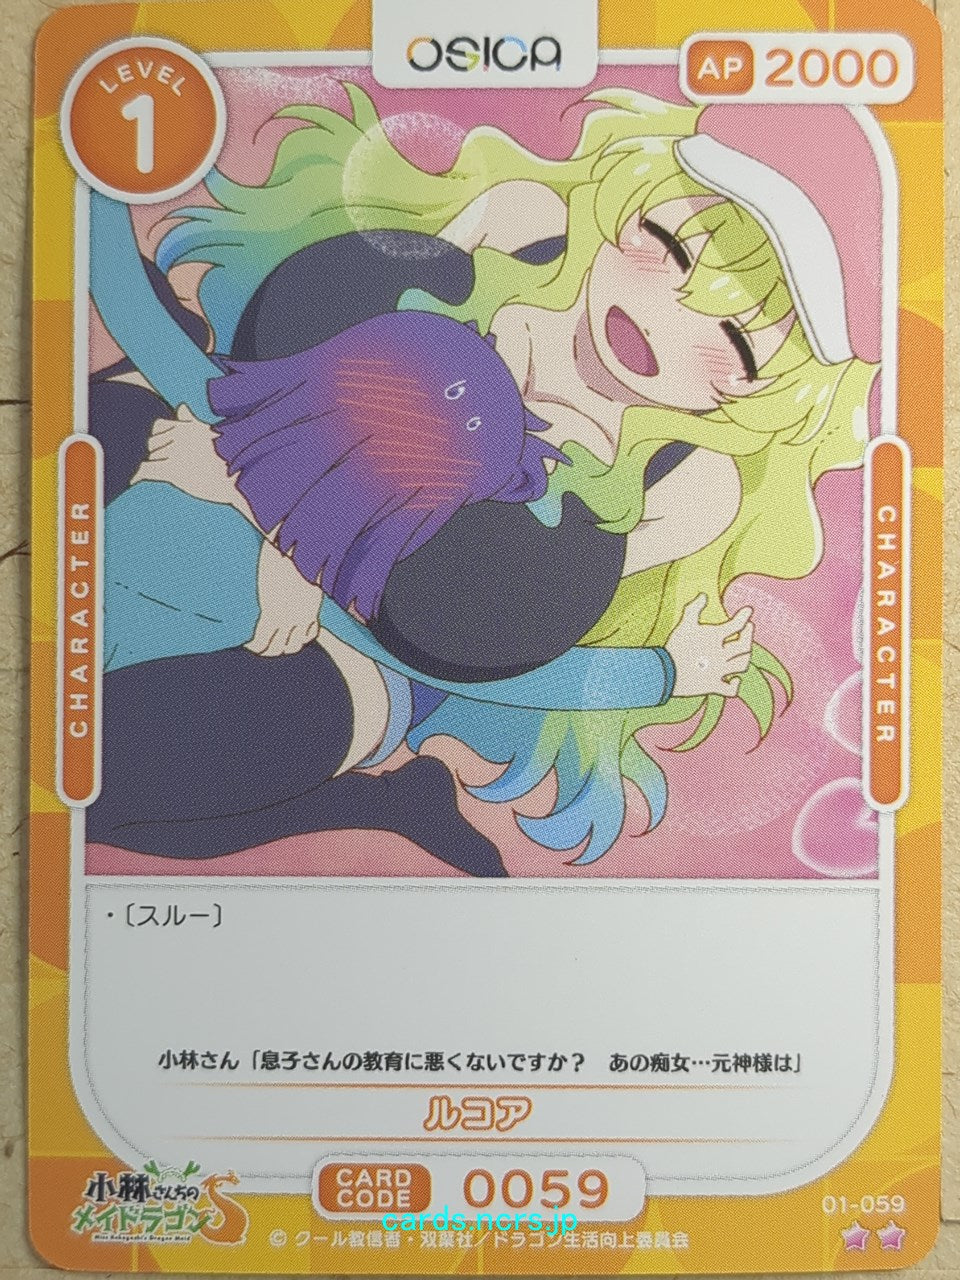 OSICA Miss Kobayashi's Dragon Maid -Lucoa-   Trading Card OS/KOB-01-059